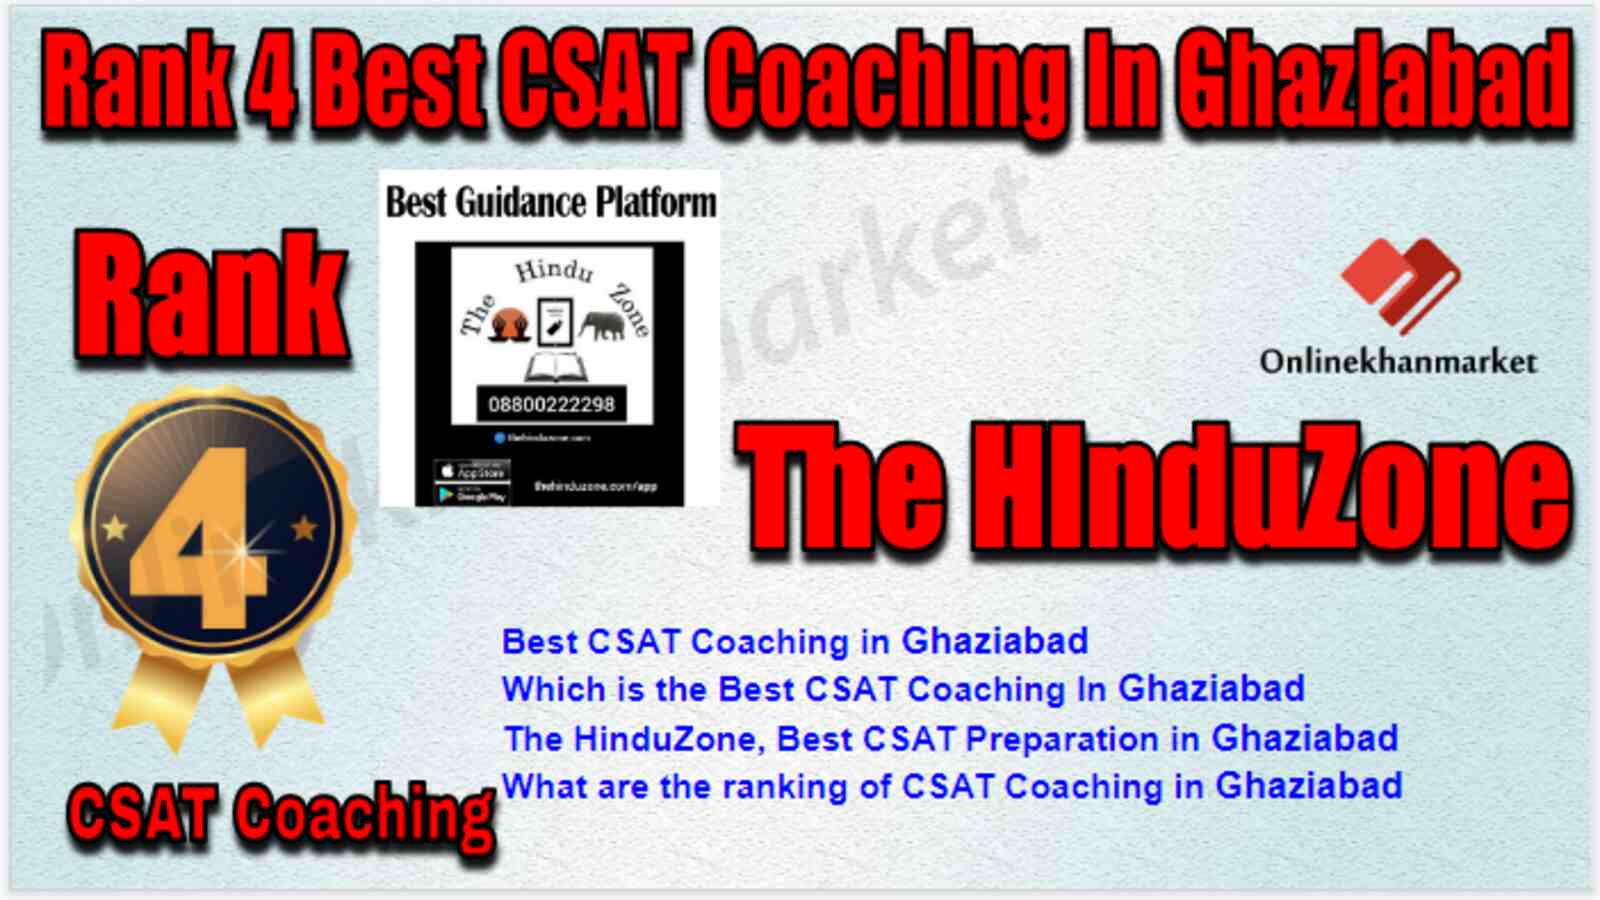 Rank 4 Best CSAT Coaching in Ghaziabad